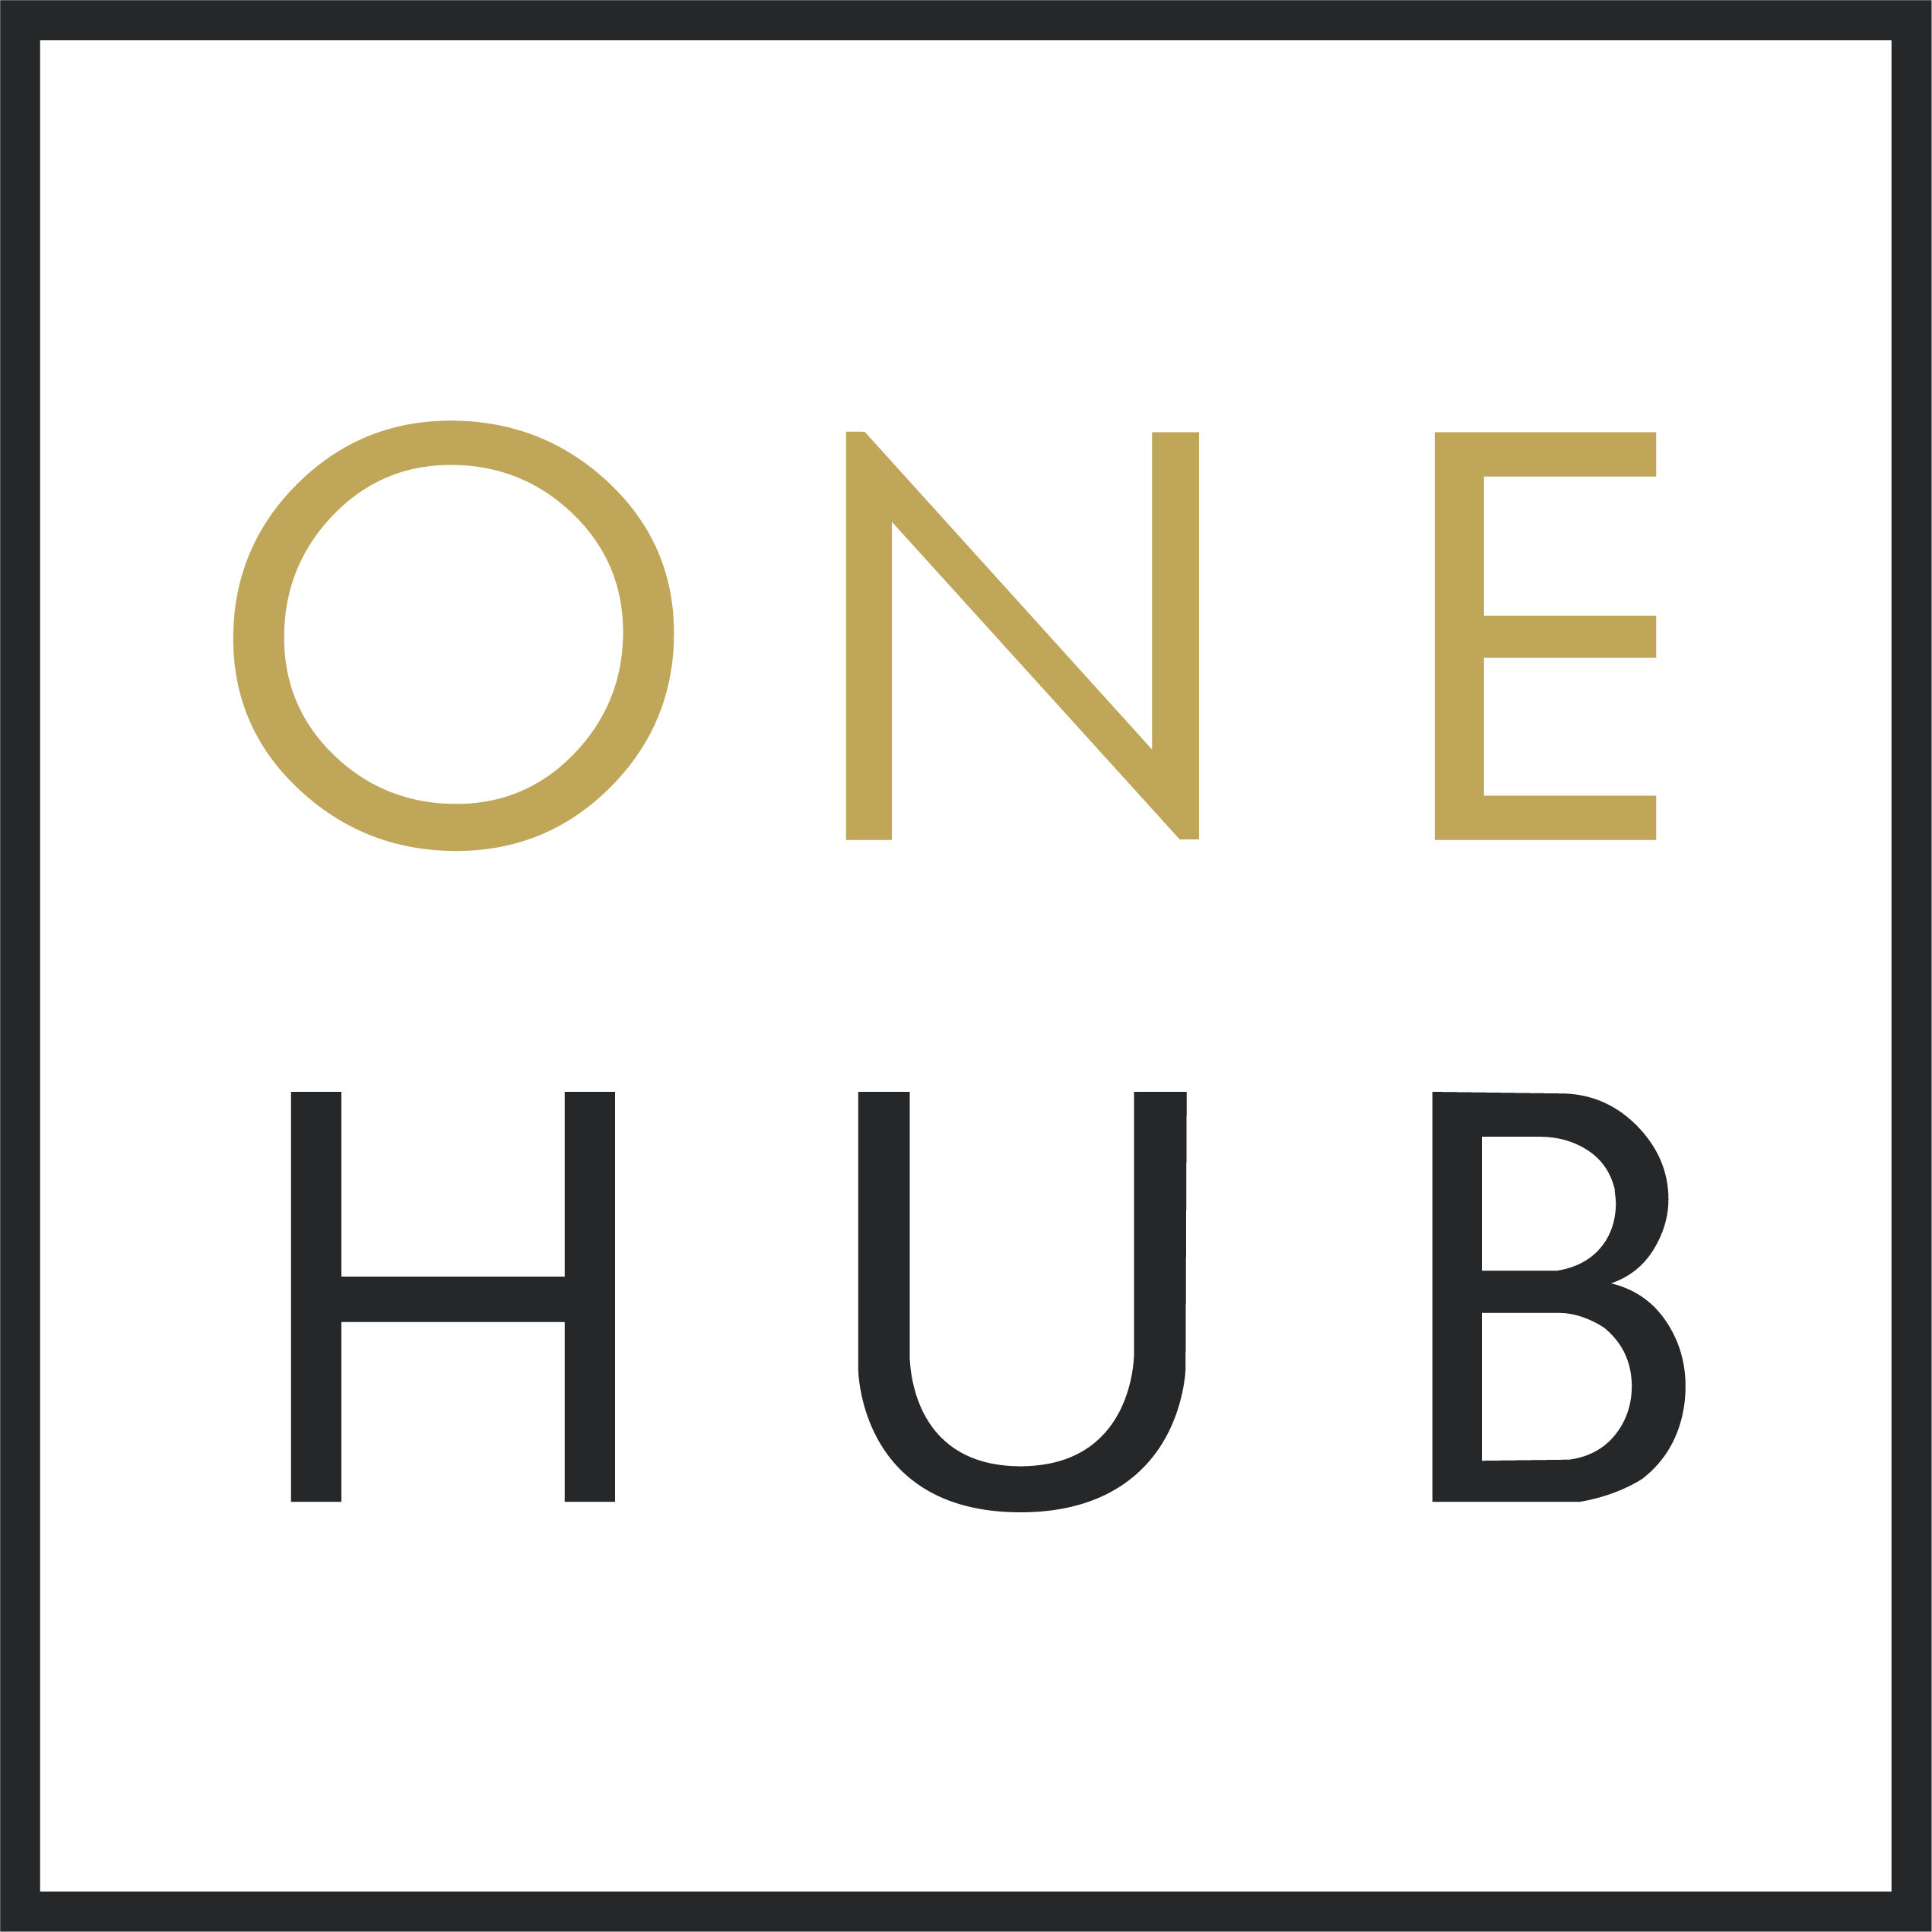 One Hub